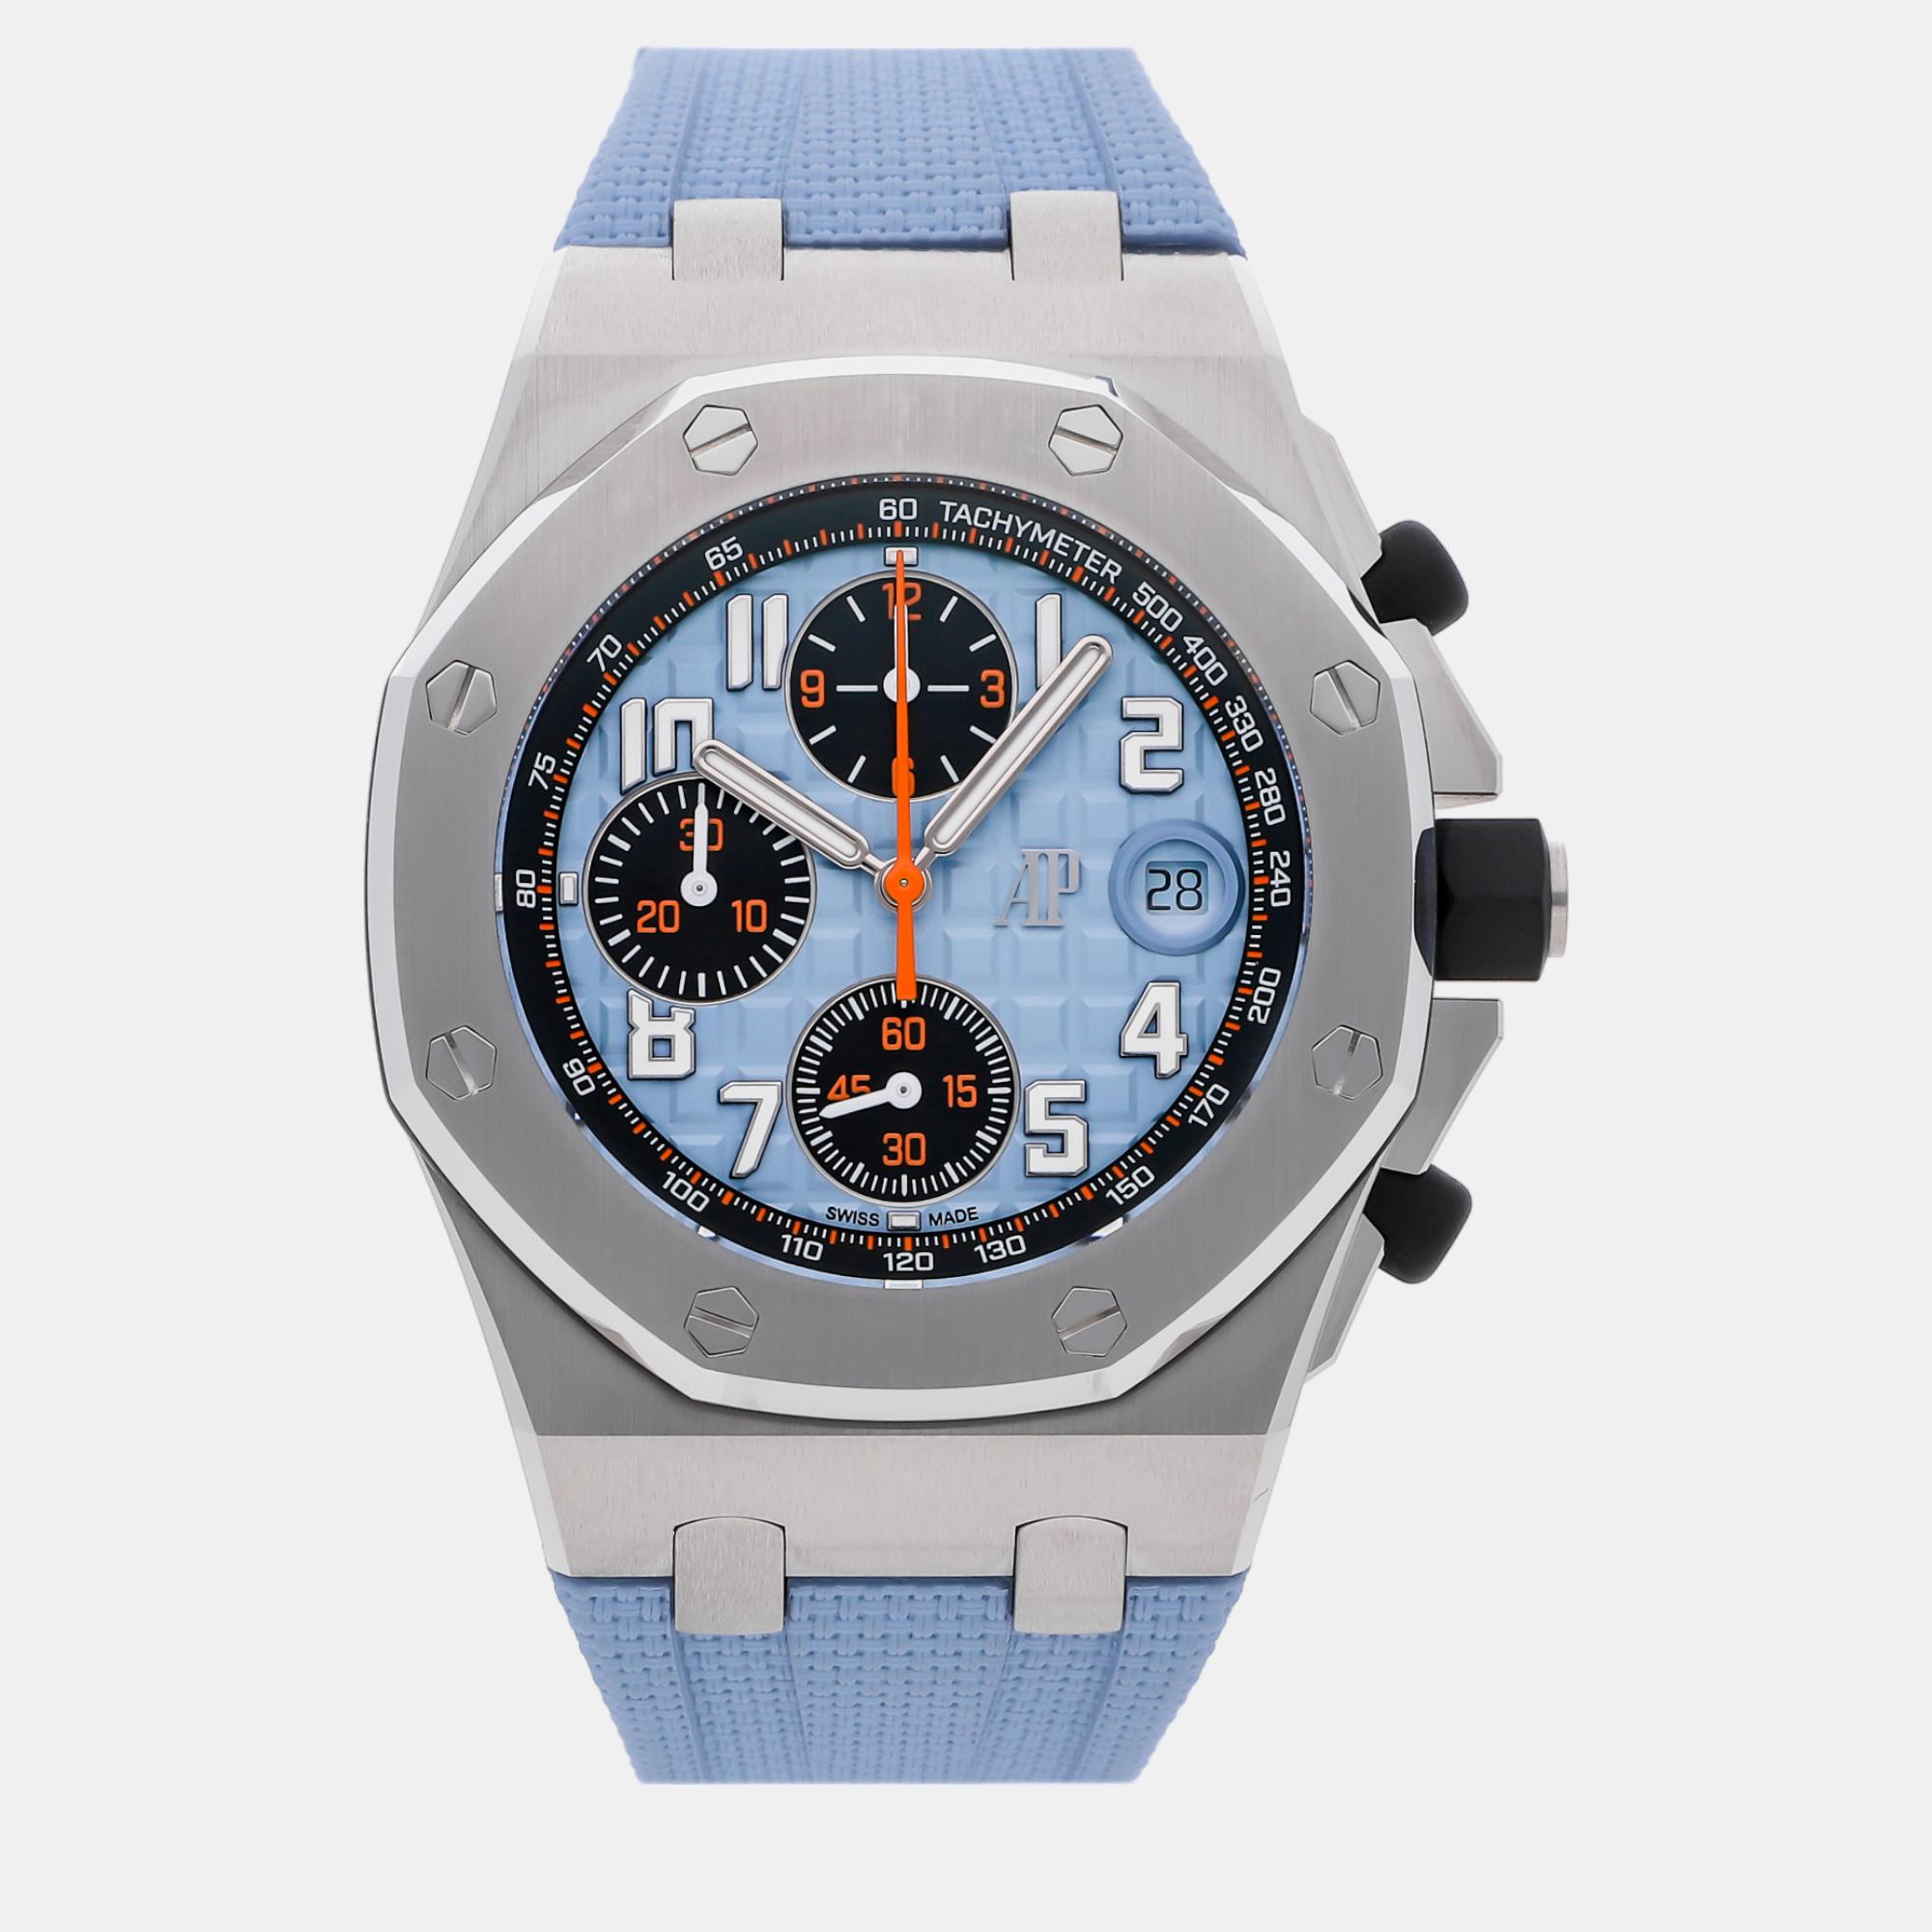 Audemars piguet blue stainless steel royal oak offshore 26238st.oo.a340ca.01 automatic men's wristwatch 42 mm